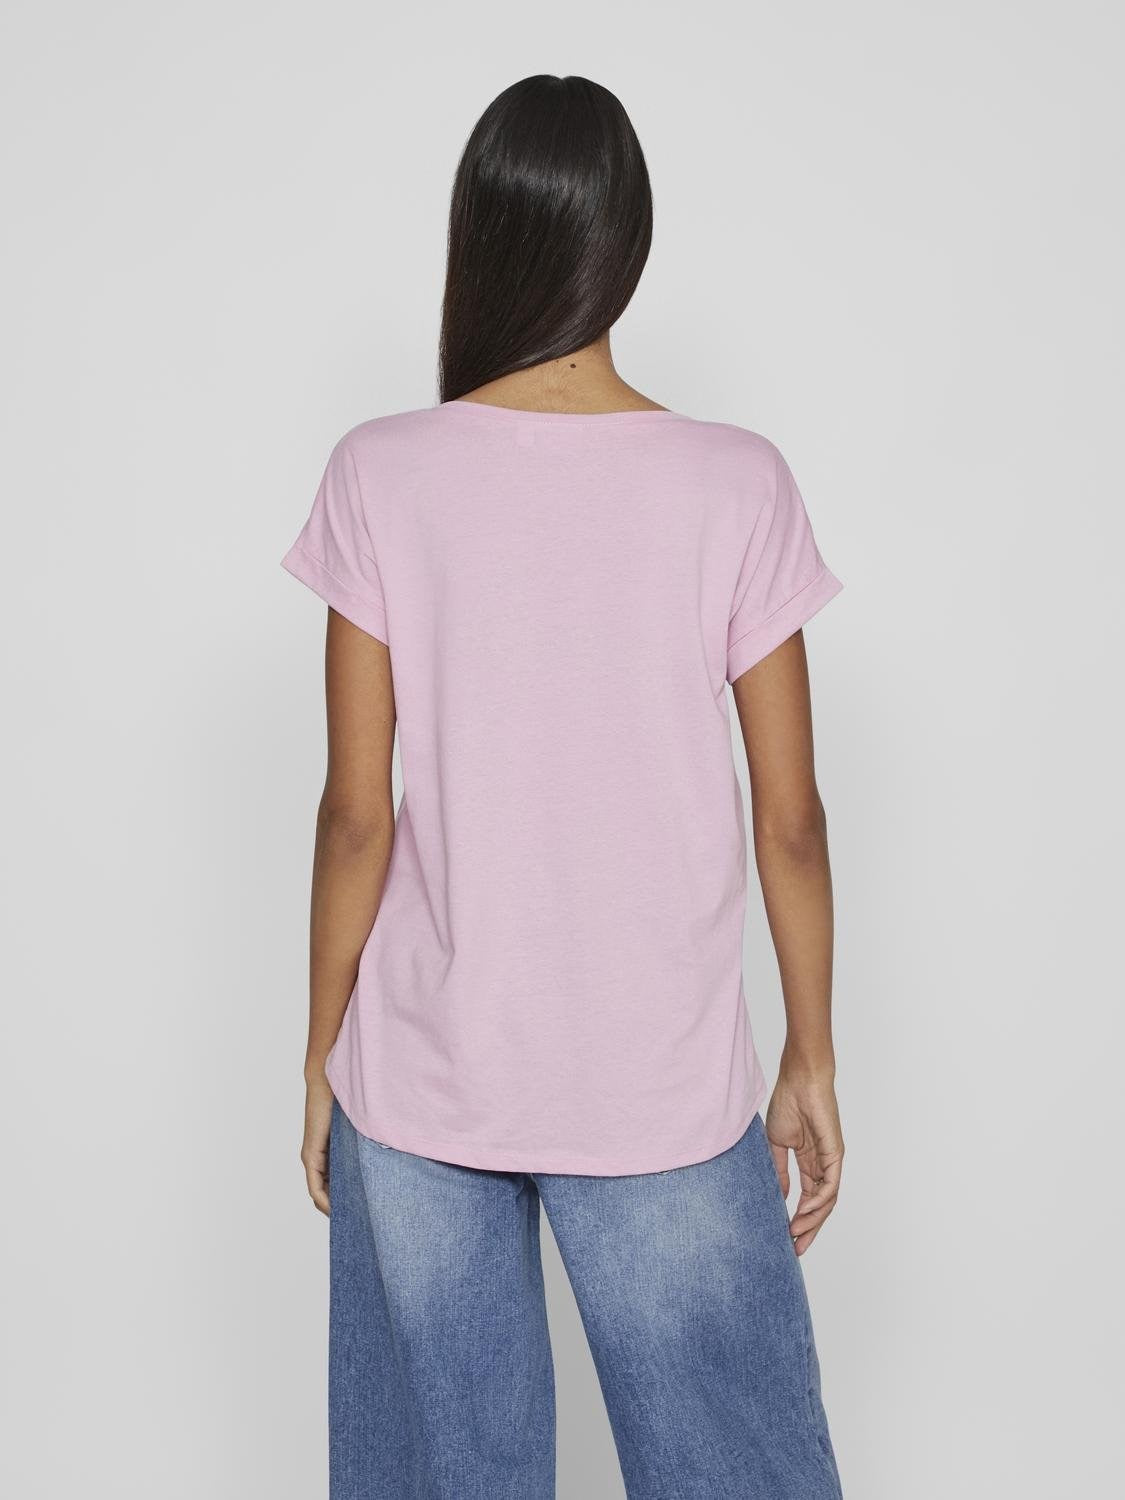 VIDreamers New Pure T-Shirt Pastel Lavender